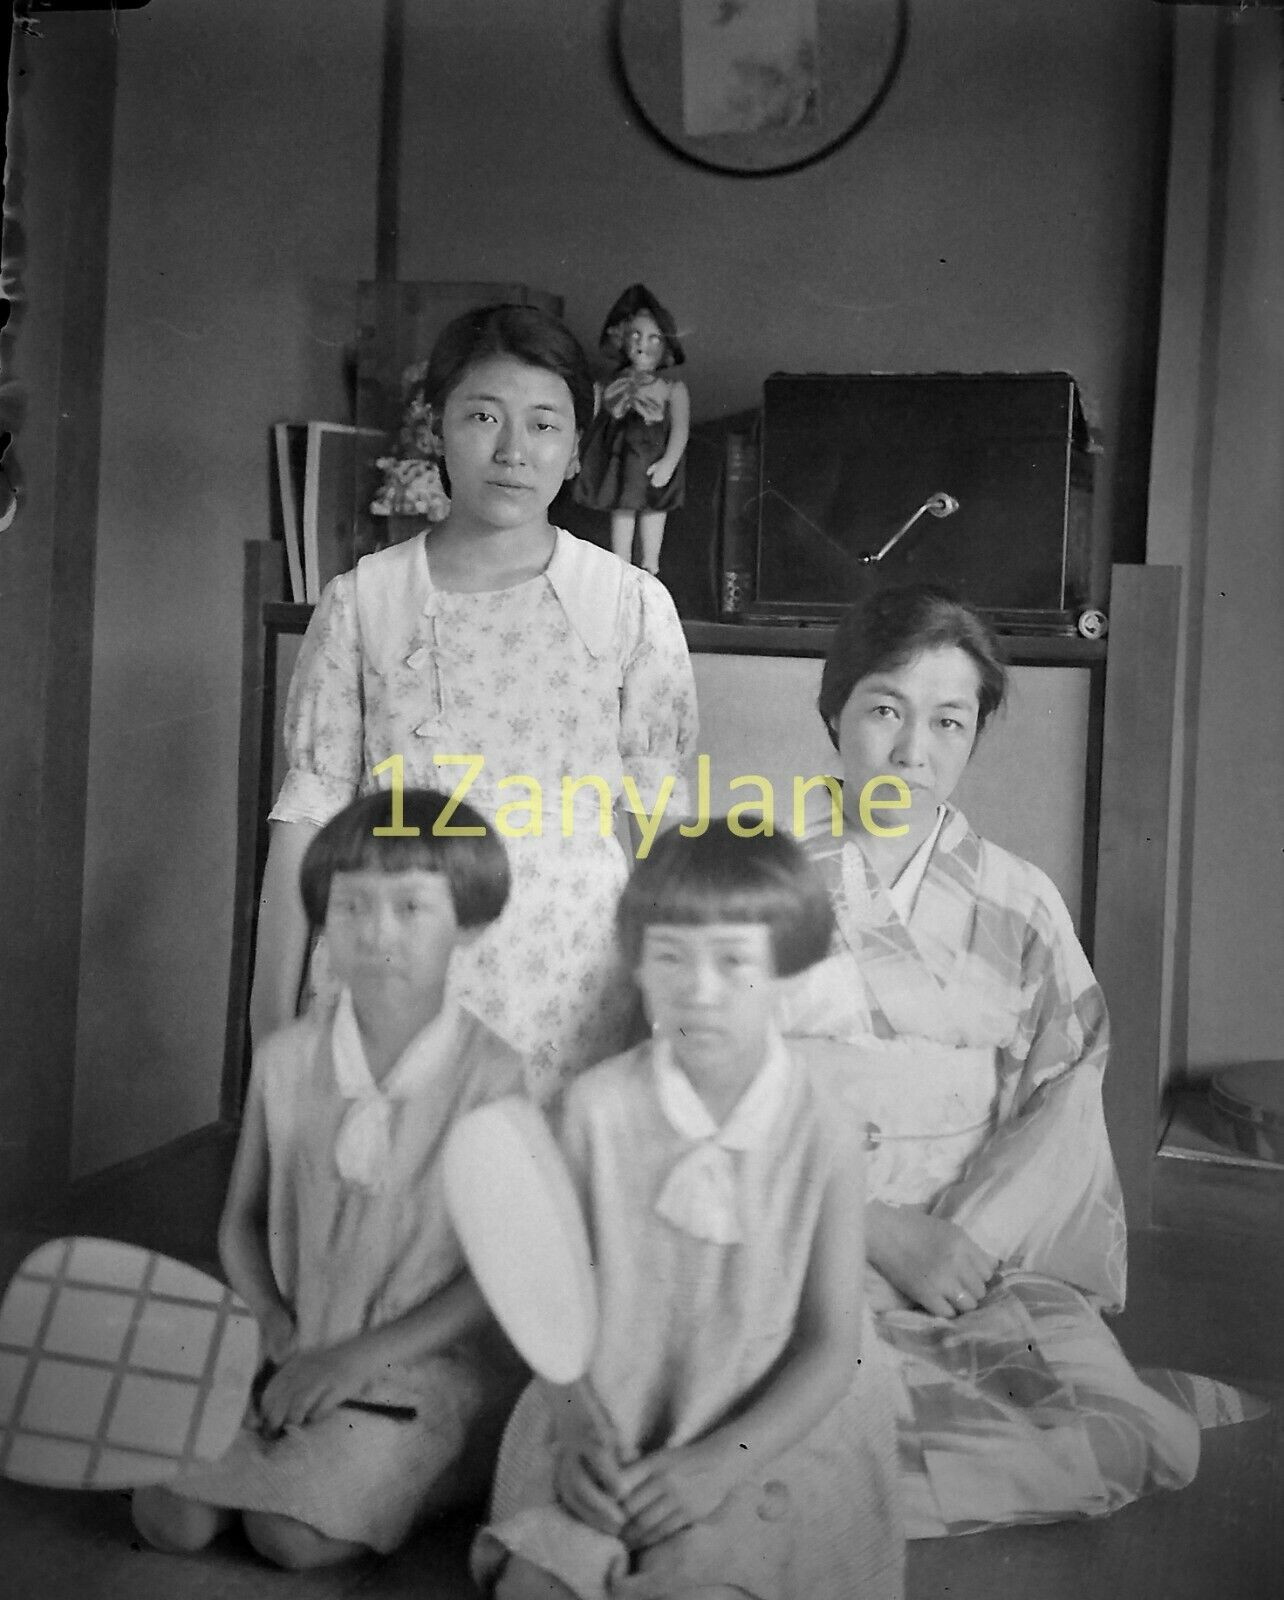 LG 11/12x8 cm JAPAN-Glass Plate Negative-JAPANESE WOMEN 2 GIRLS WITH FANS FLOOR